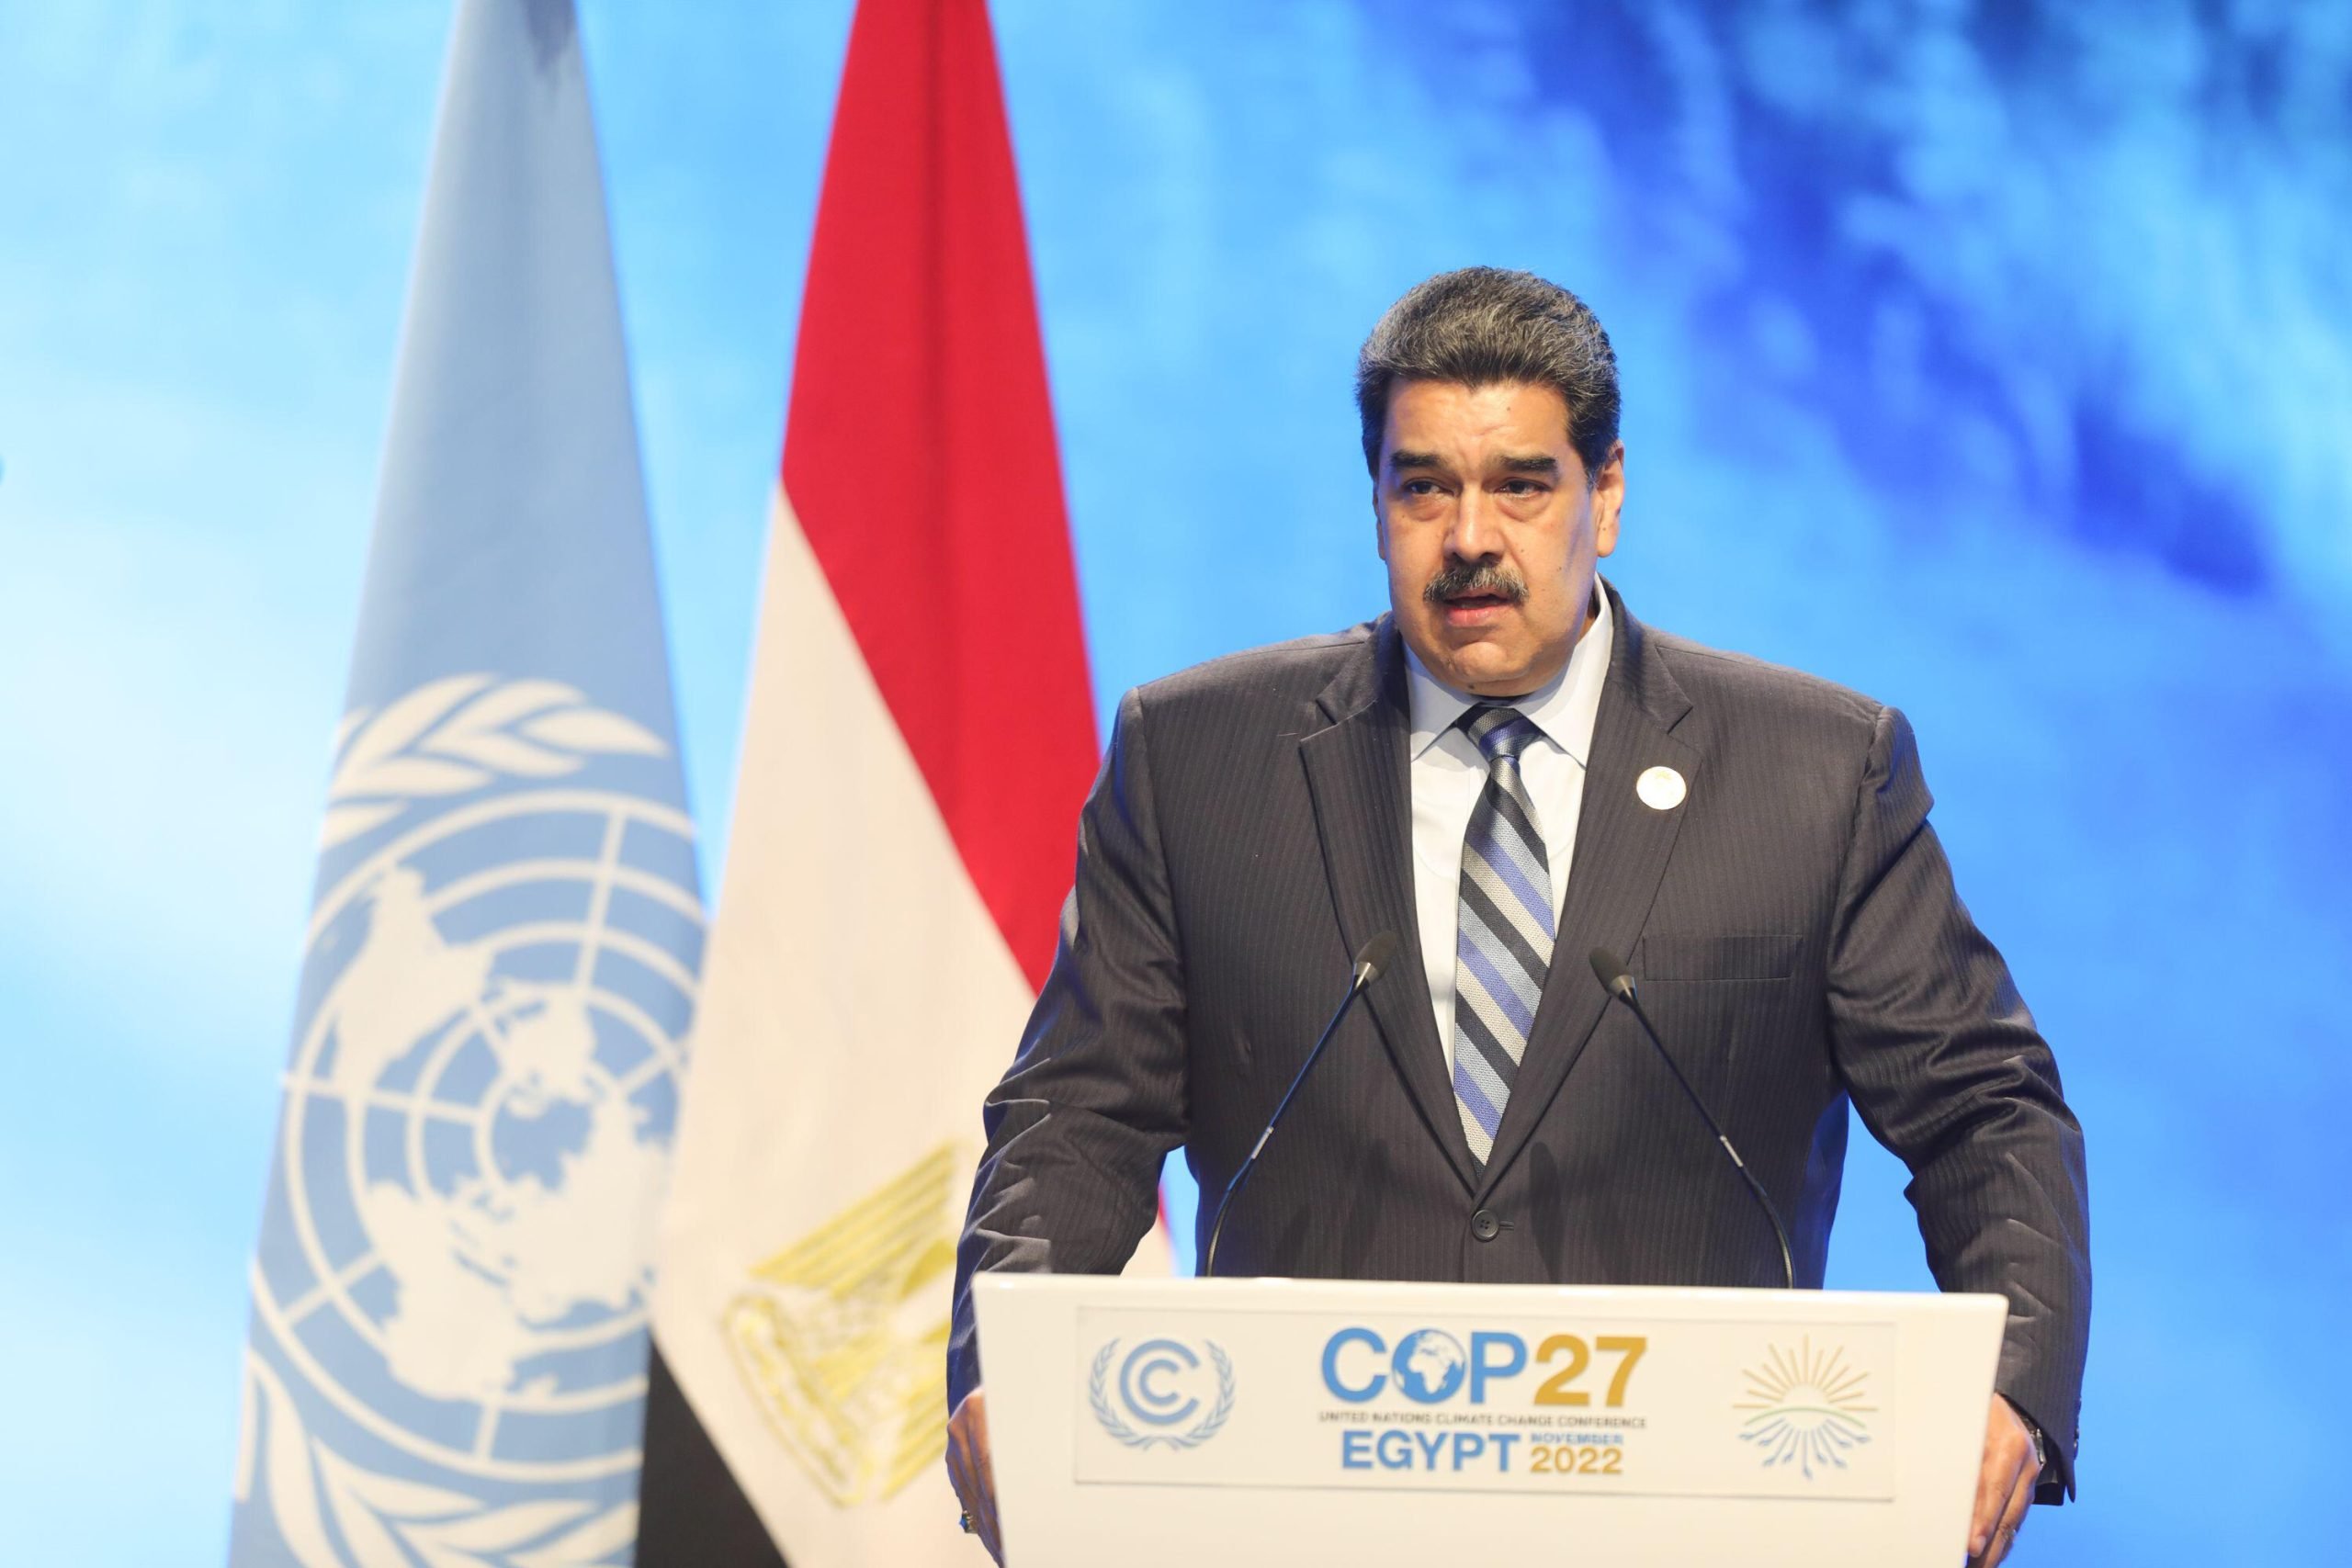 Nicolas Maduro at COP27